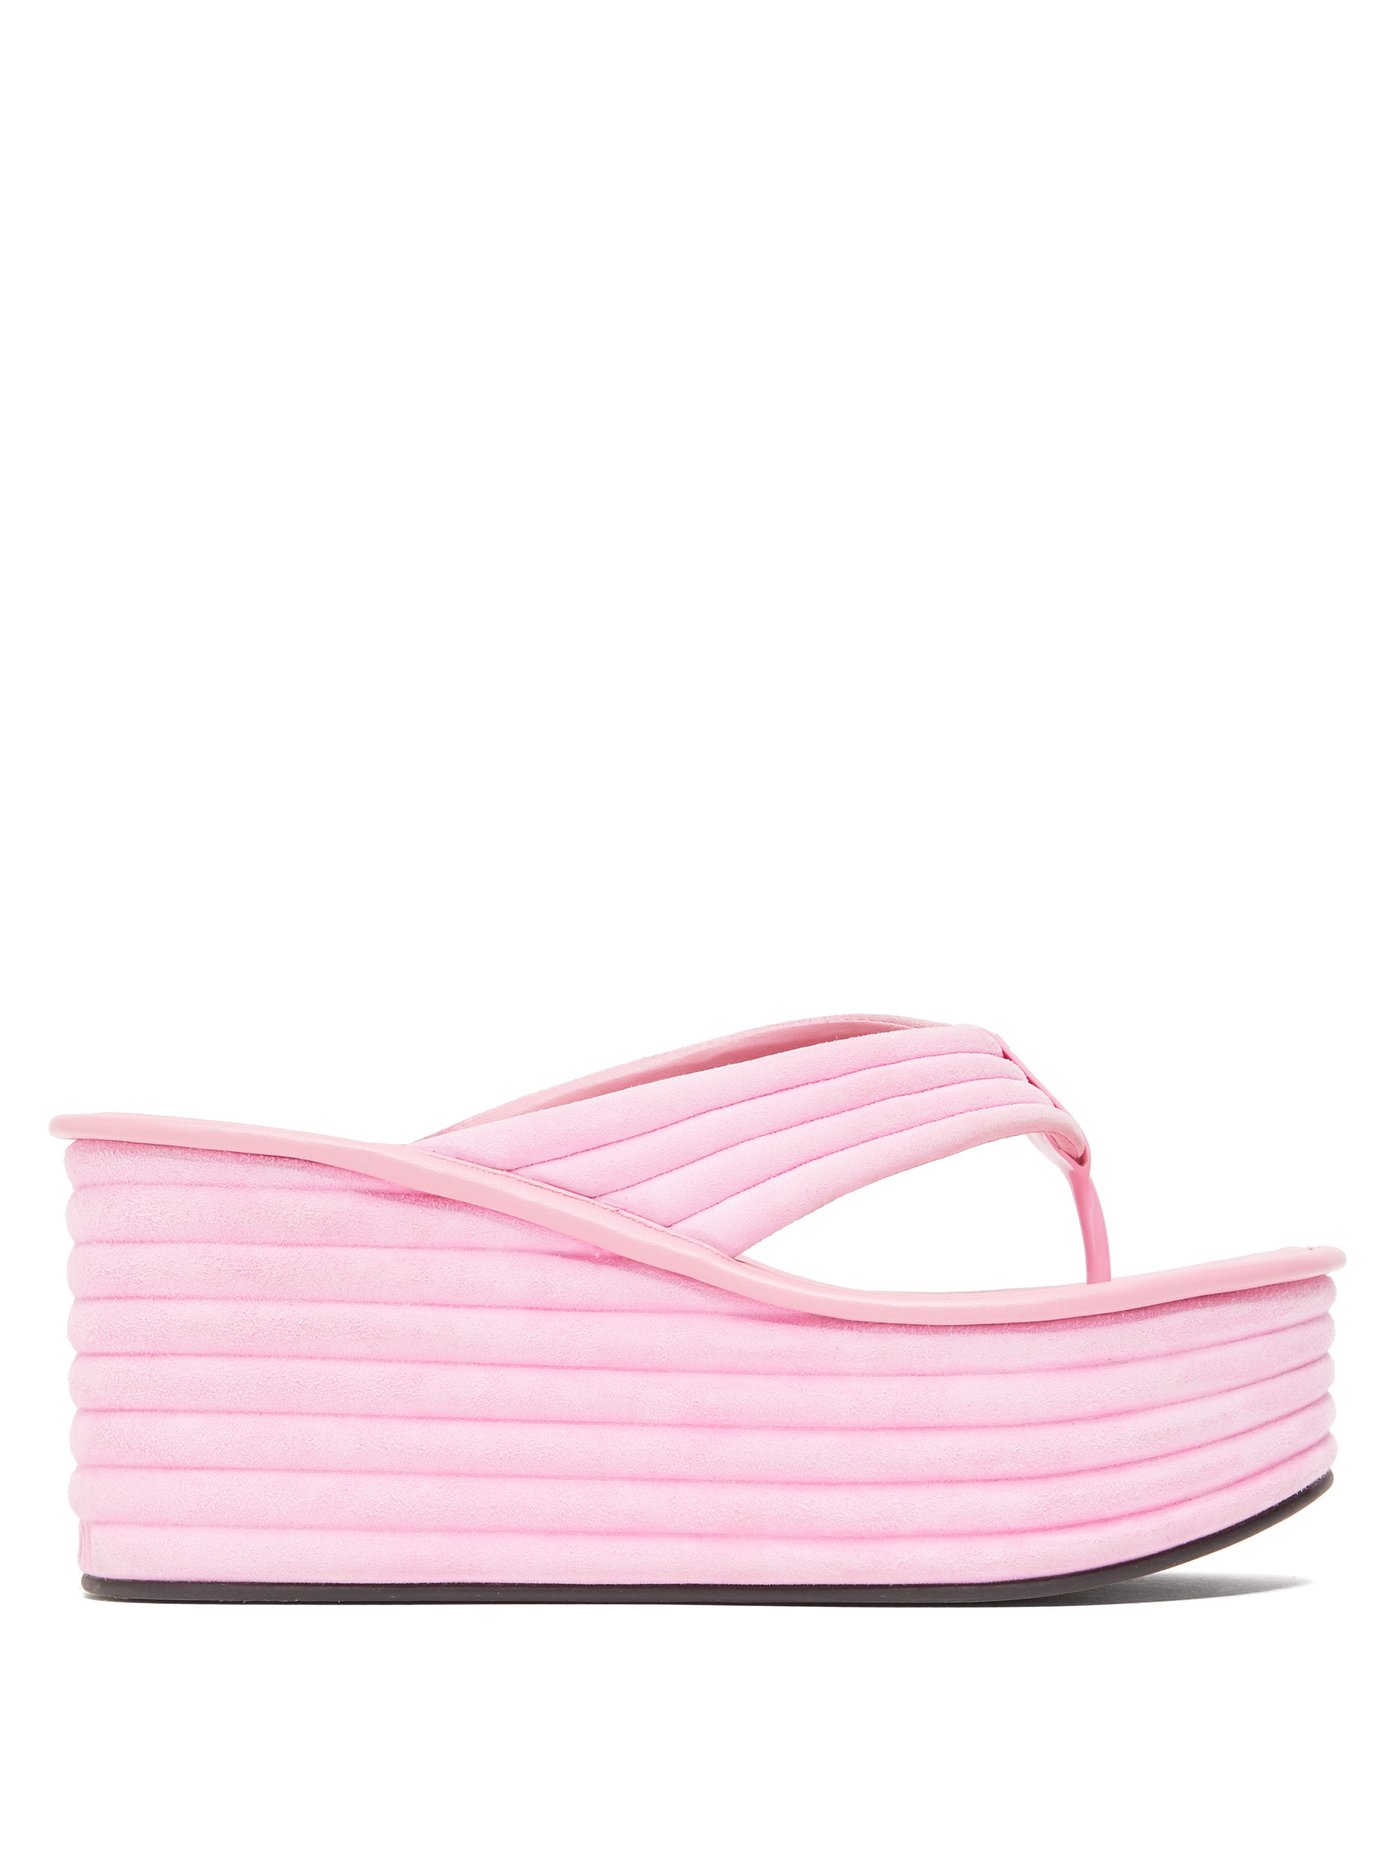 pink suede sandals uk